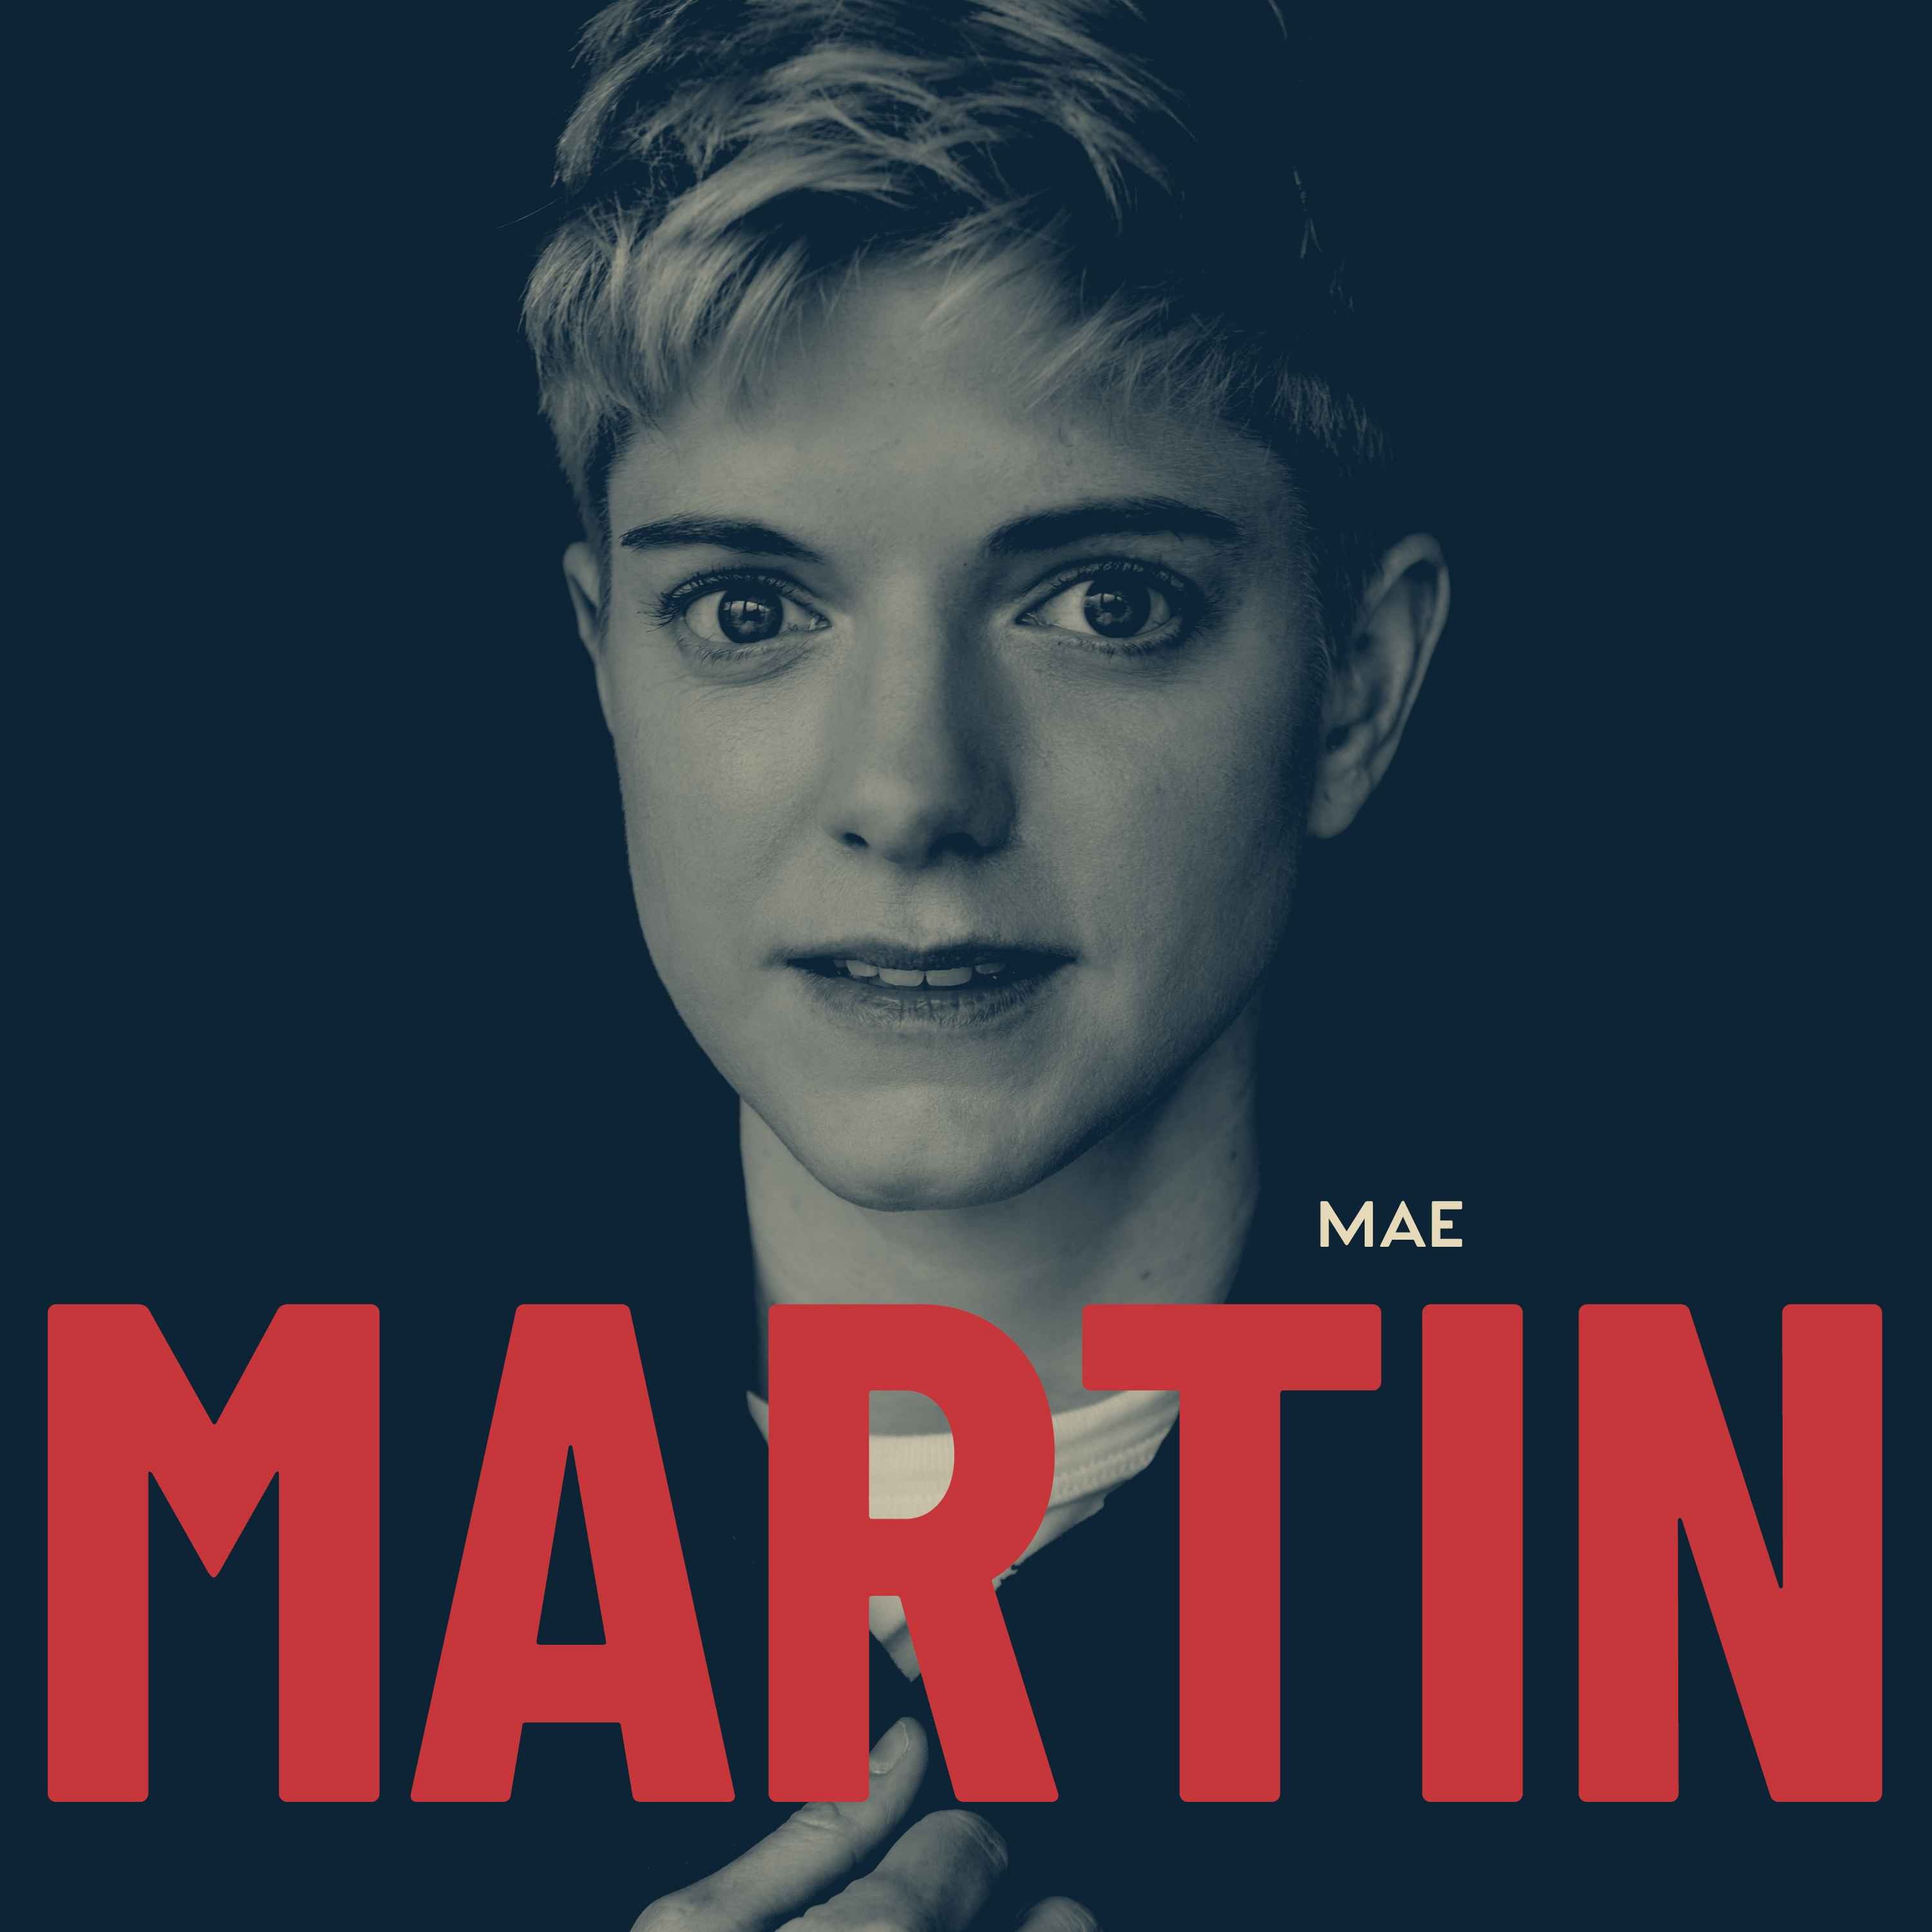 Mae Martin